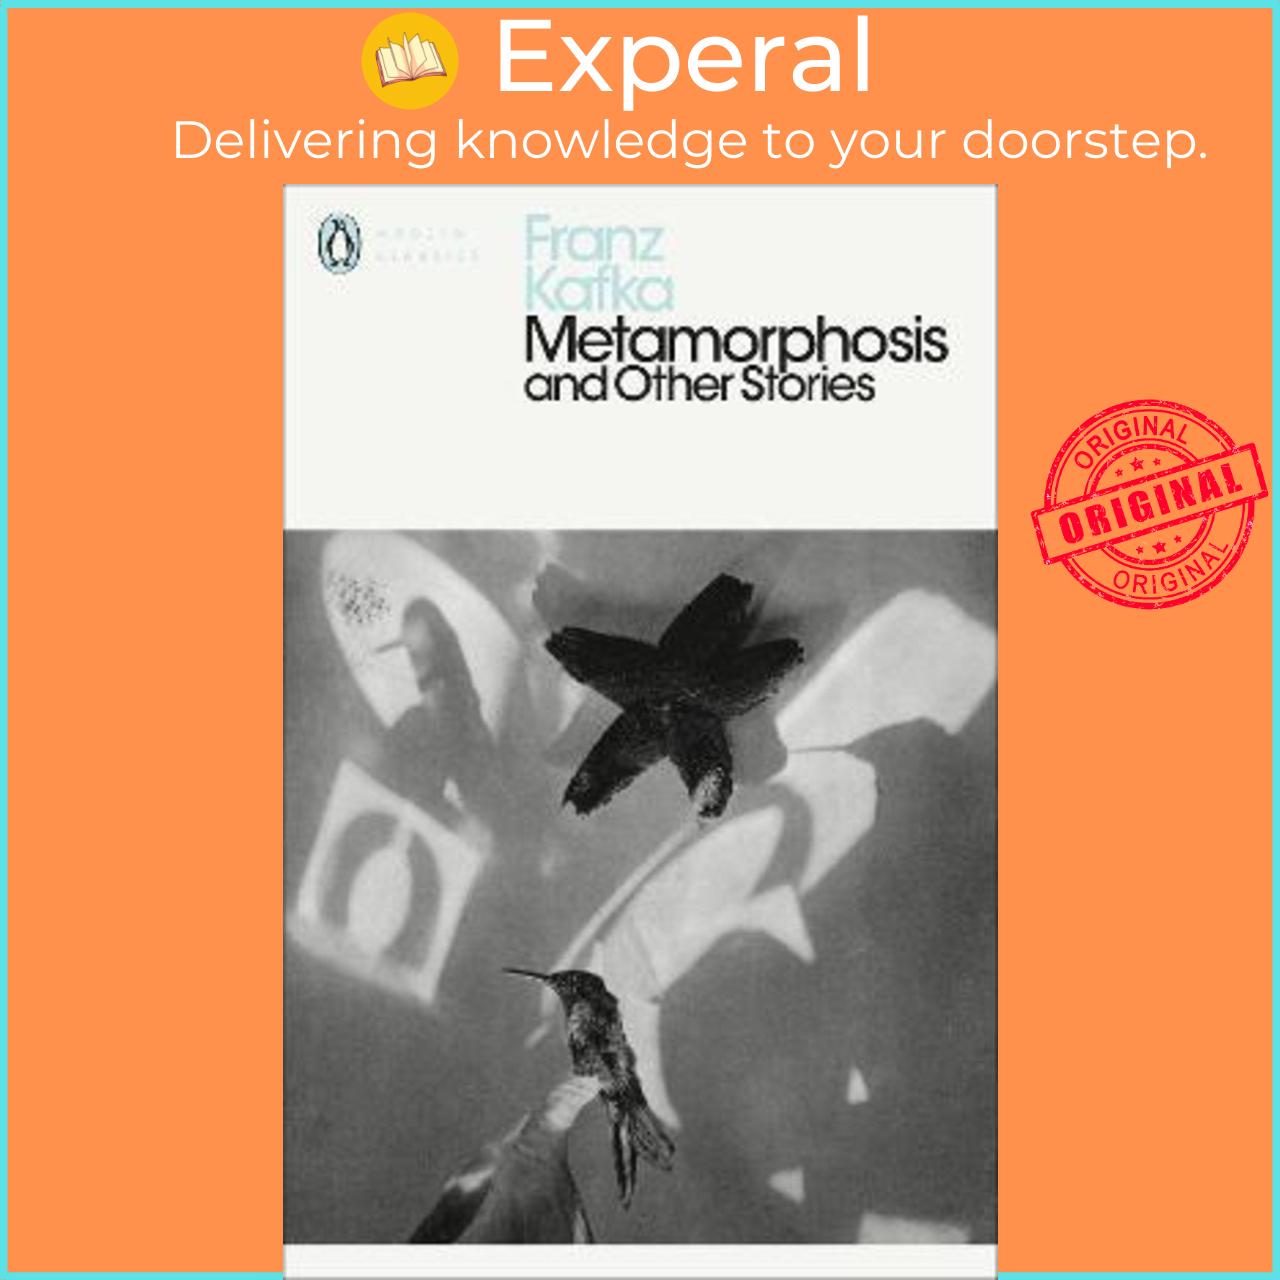 Sách - Metamorphosis and Other Stories by Franz Kafka (UK edition, paperback)